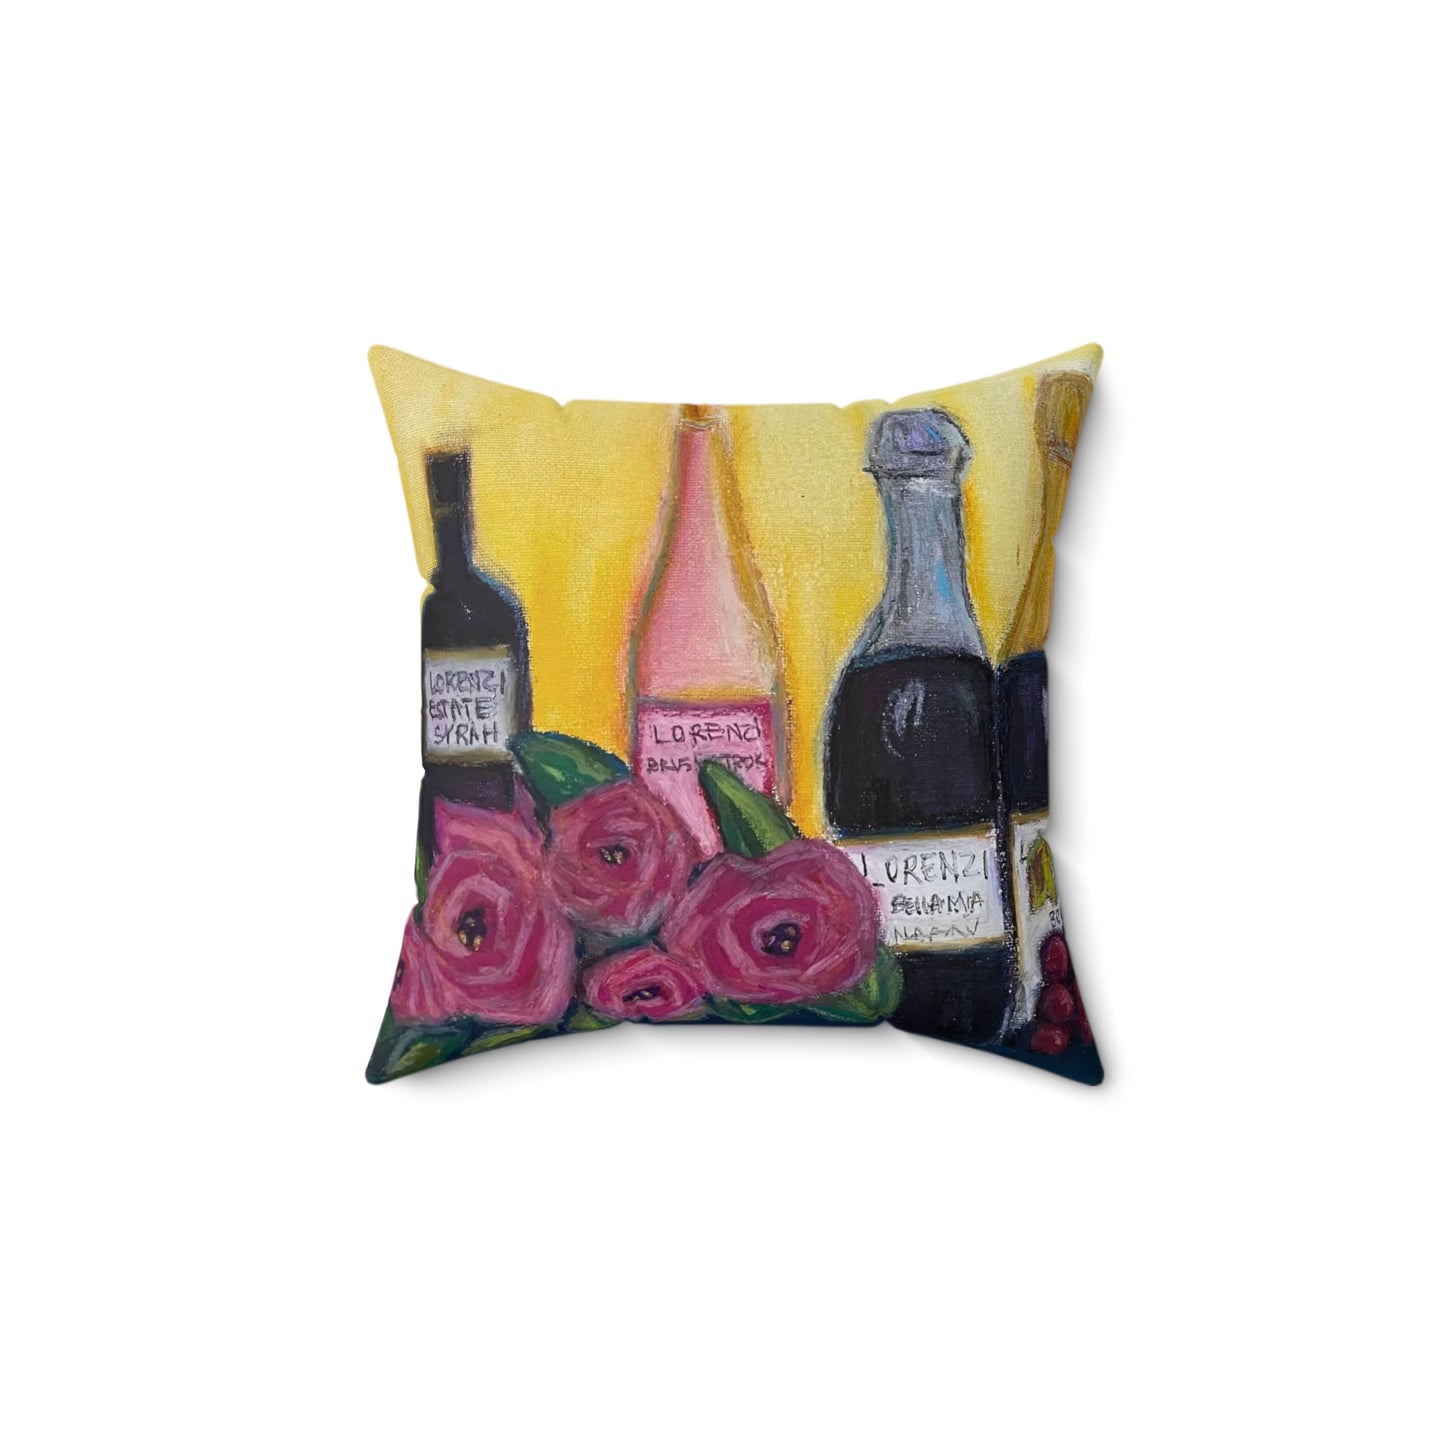 Lorenzi Estate Wine and Roses Indoor Spun Polyester Square Pillow